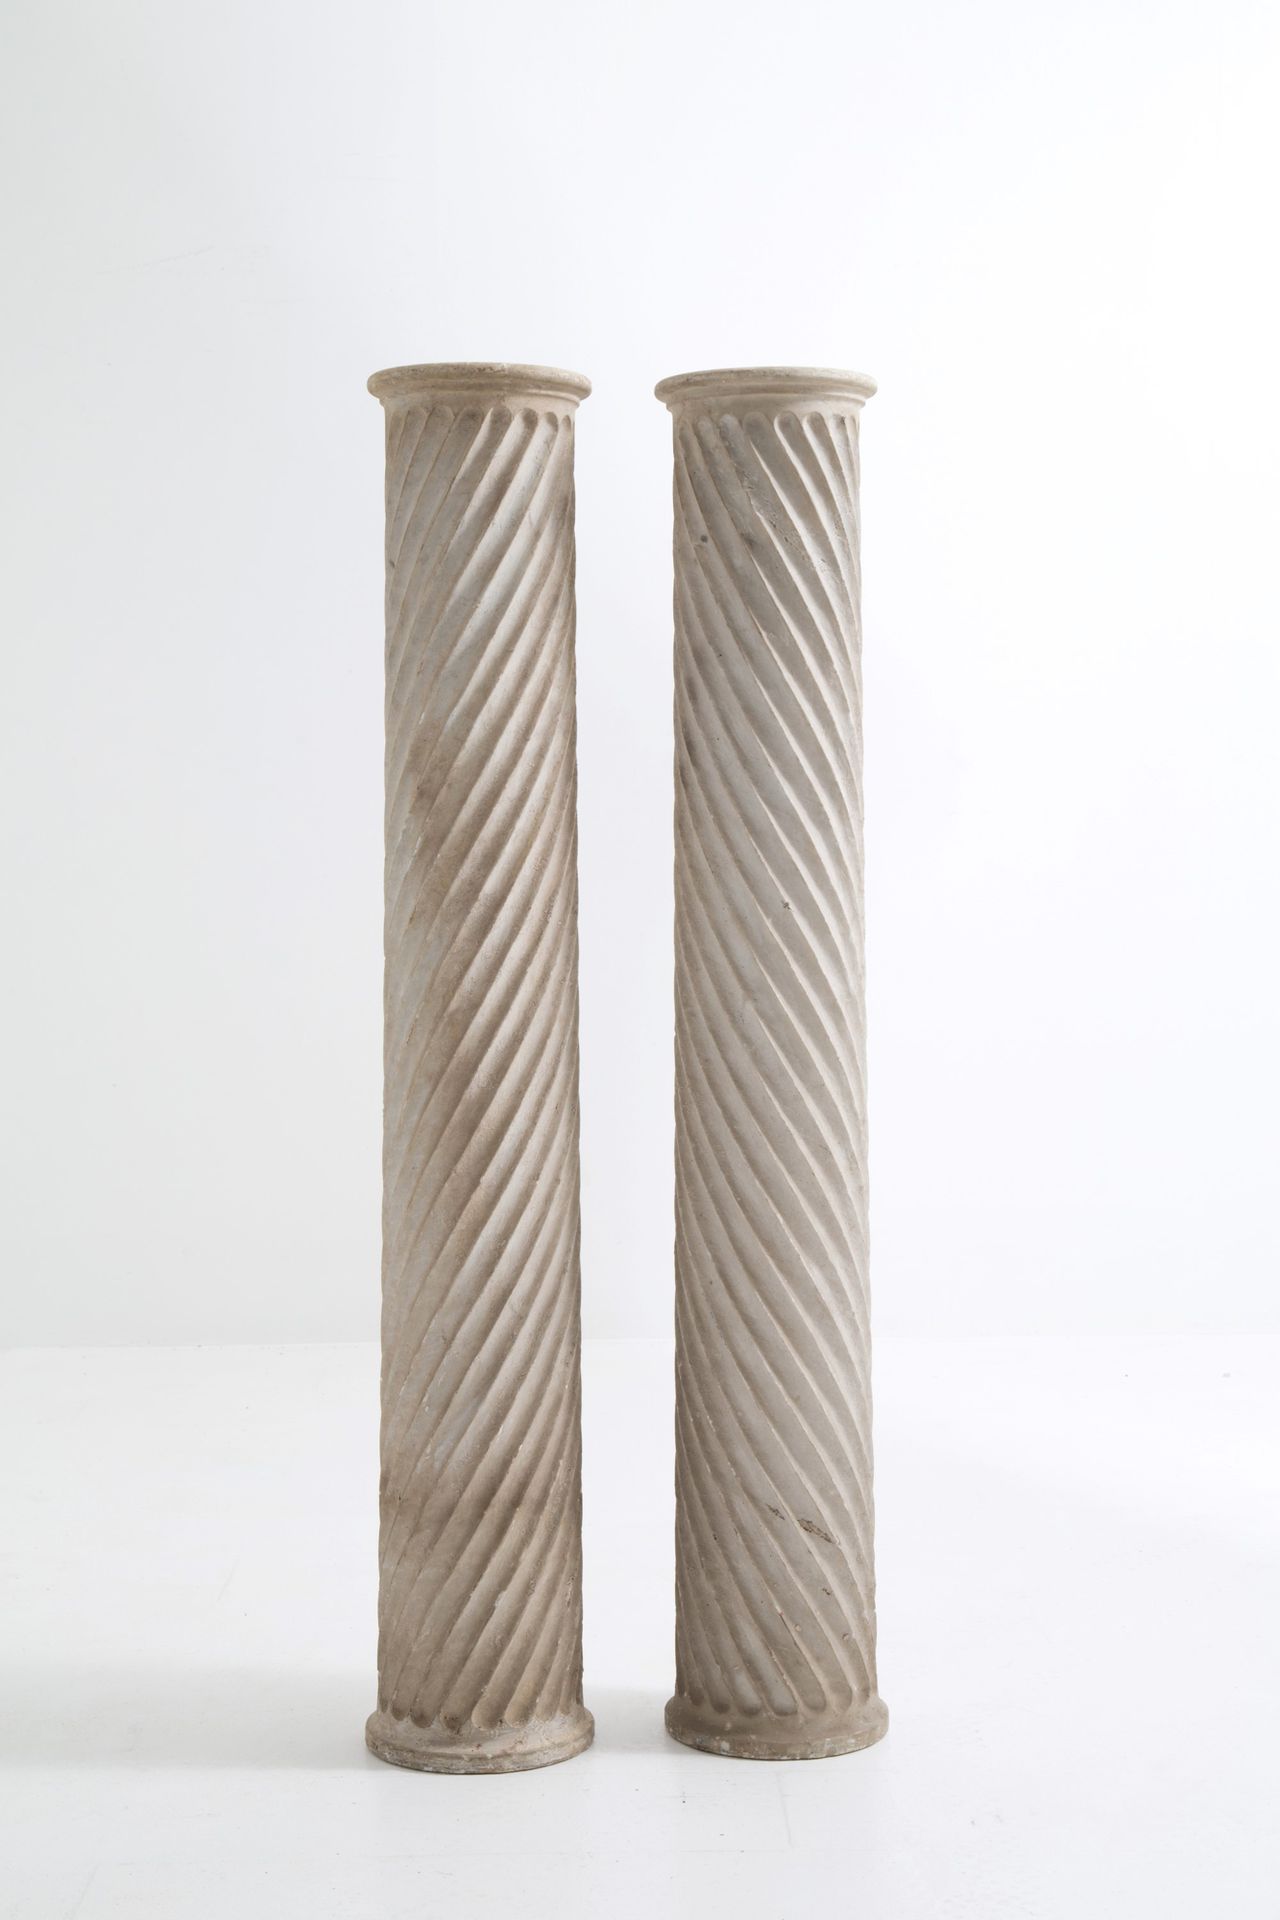 Marble columns 一对白色大理石火炬柱。16世纪。120x20 cm 约。